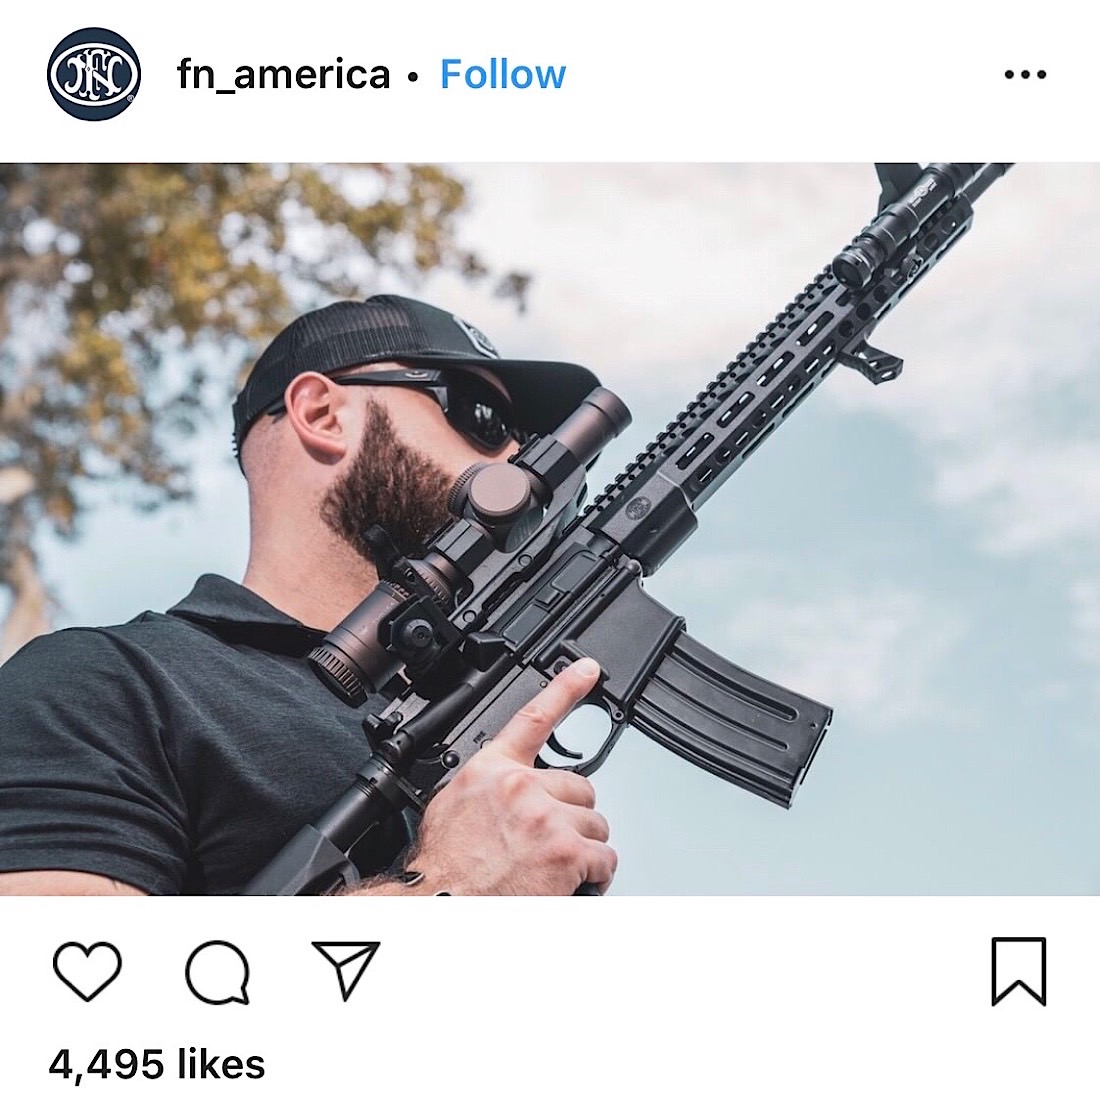 An Instagram post from firearms company FN America (Instagram - @fn_america)